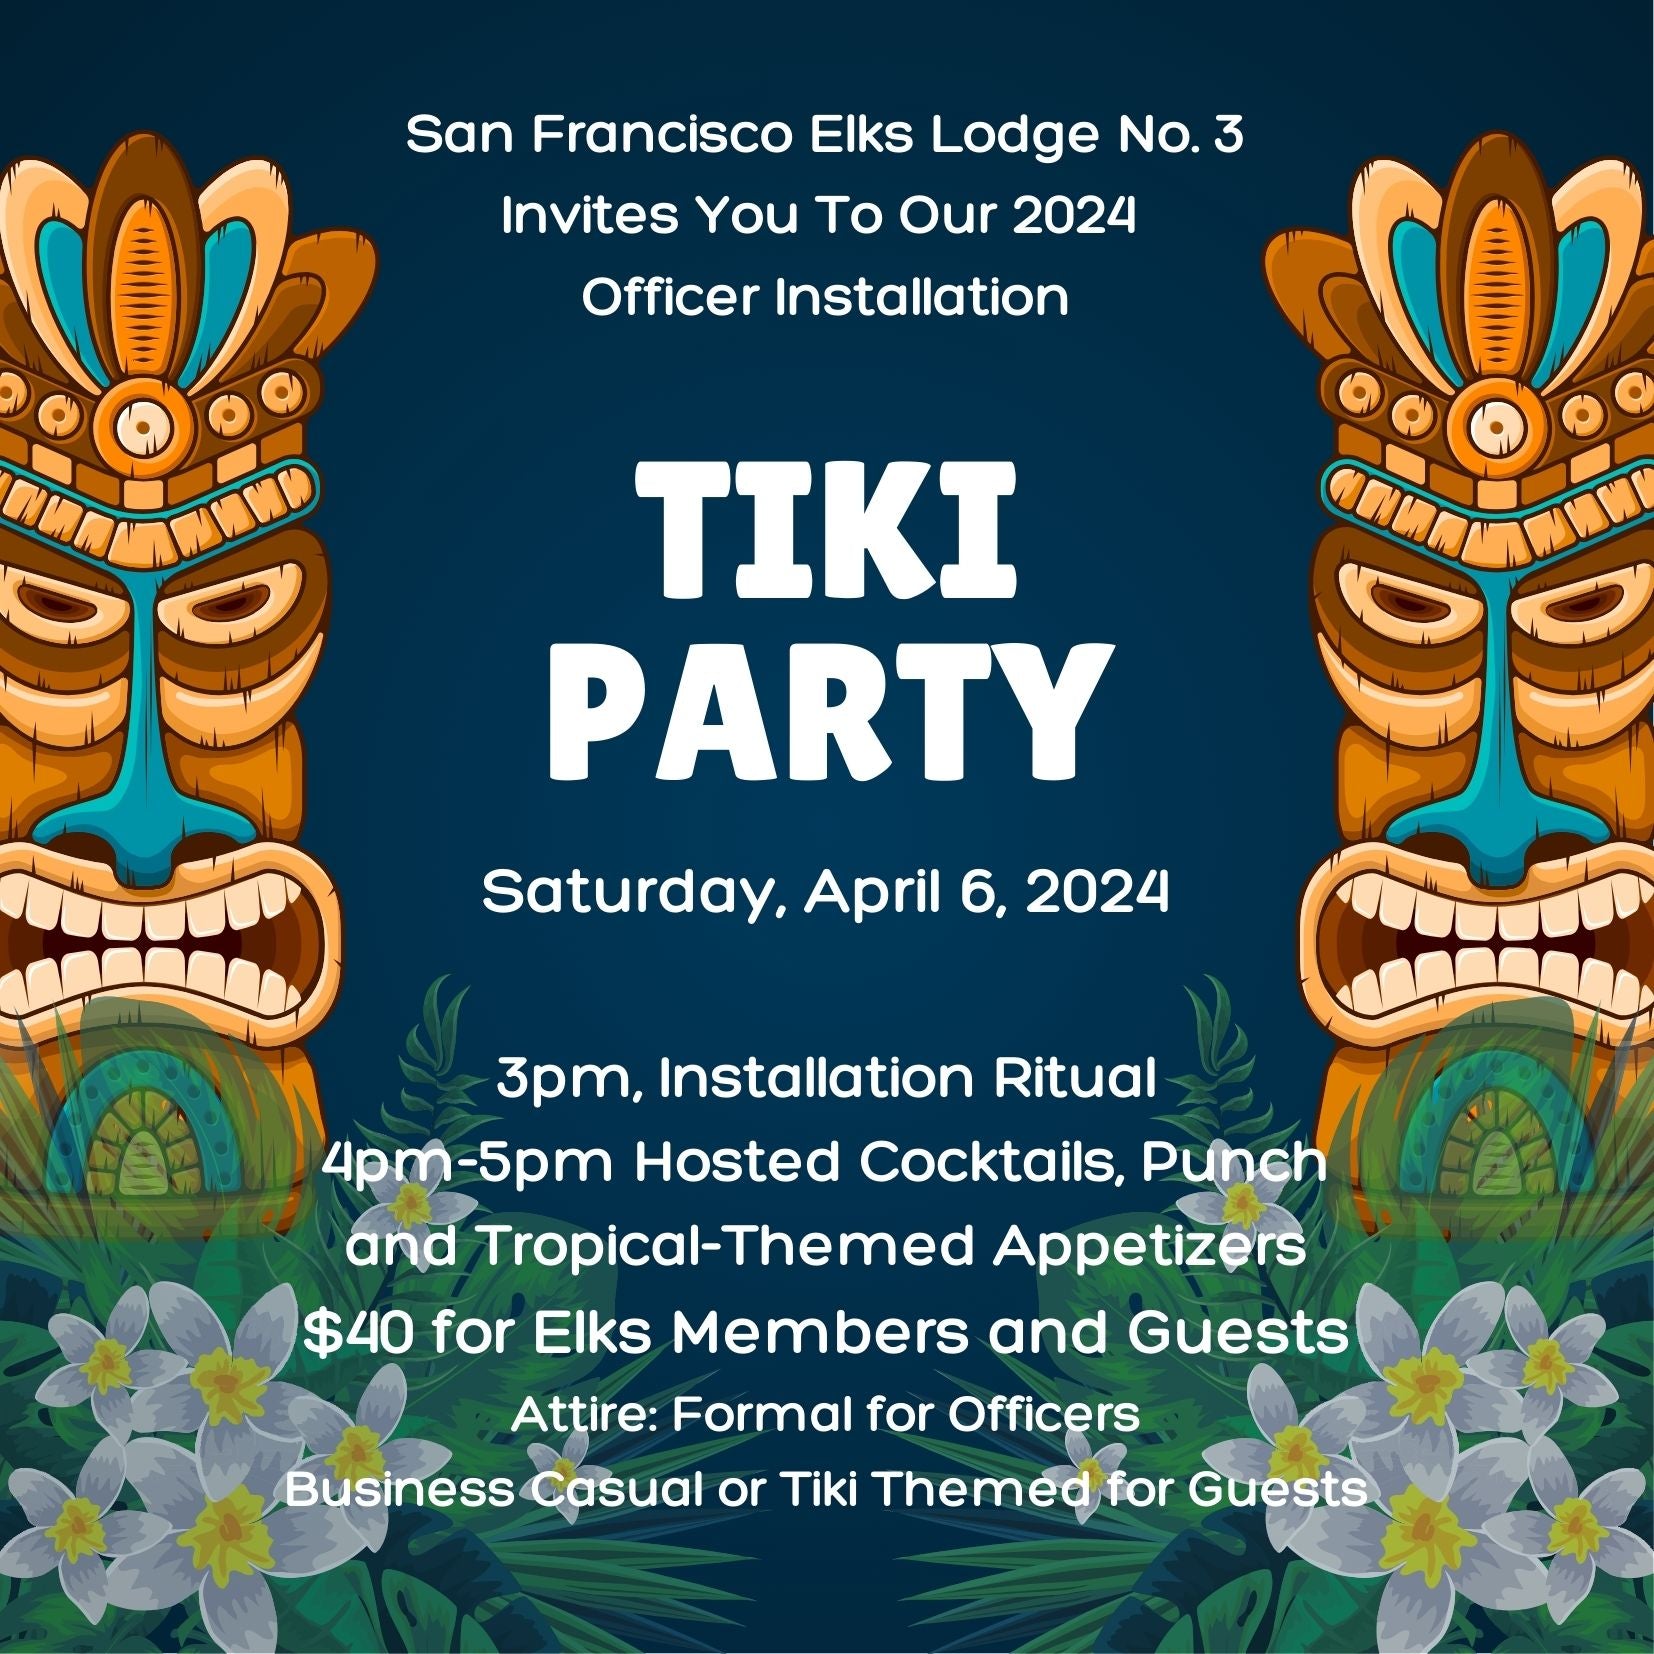 2024 Officer Installation & Tiki Party